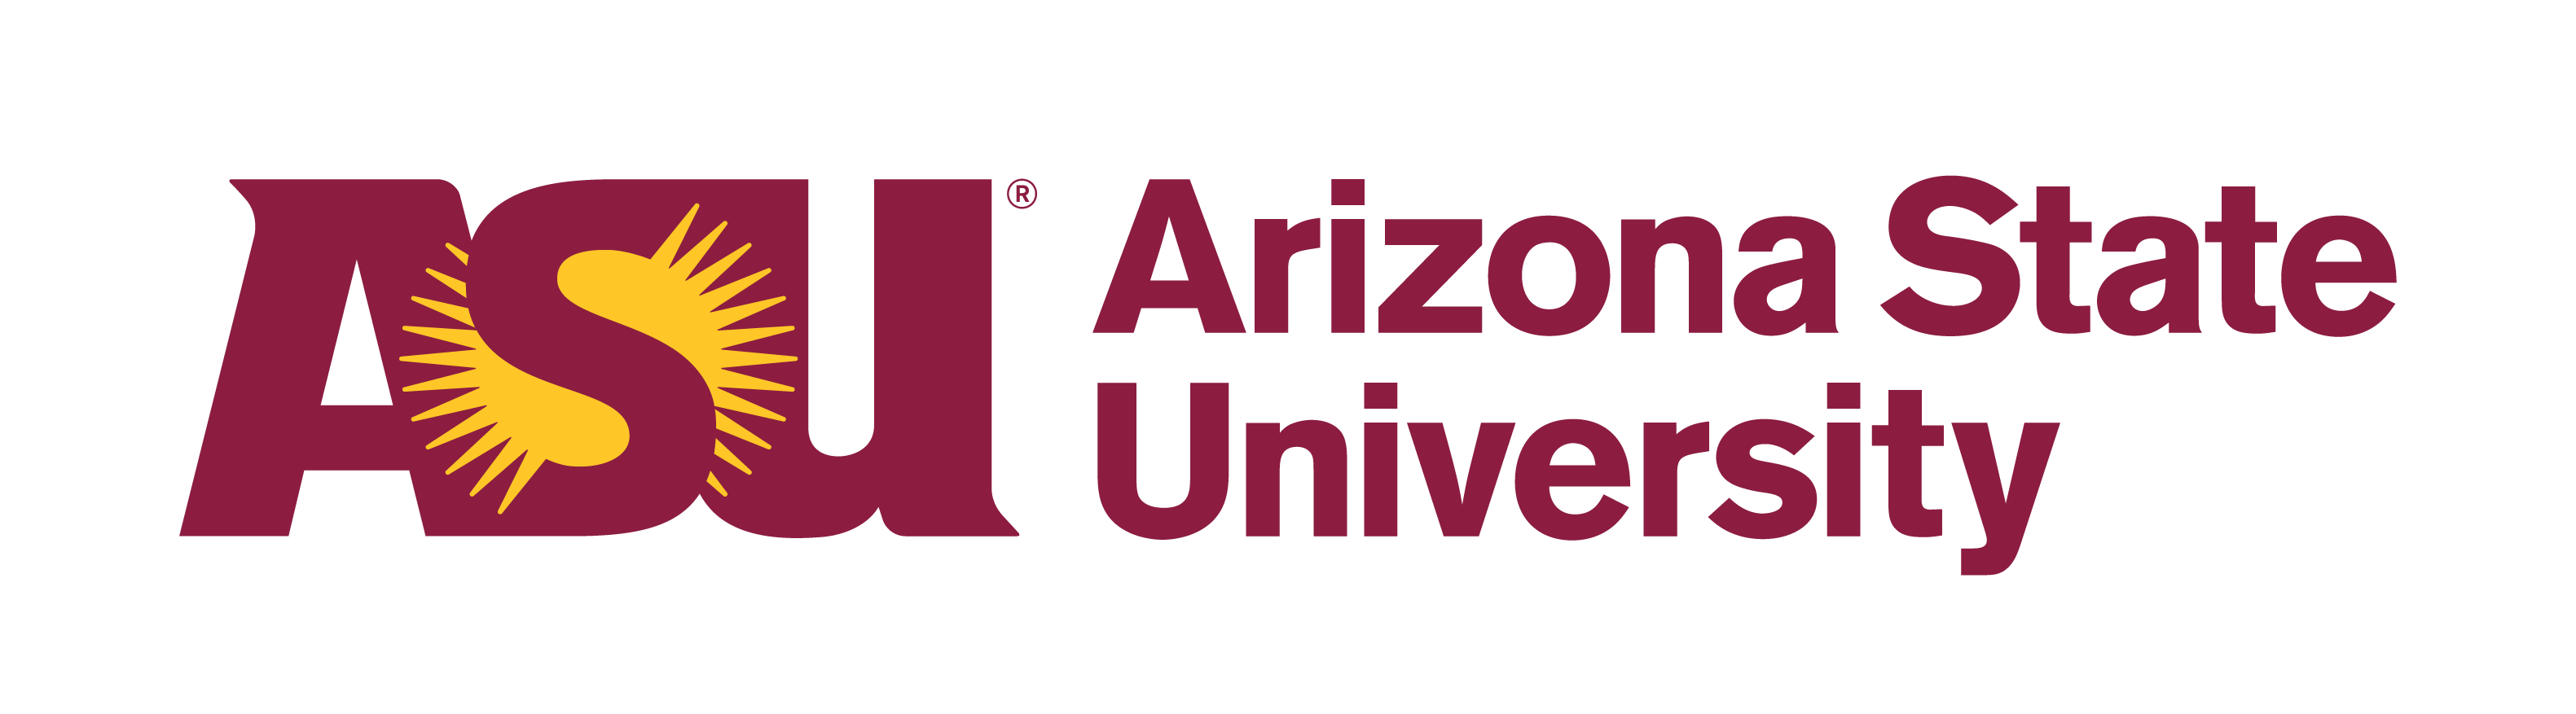 Arizona State University Logo - Arizona State University Partners For Water Ways Exhibit